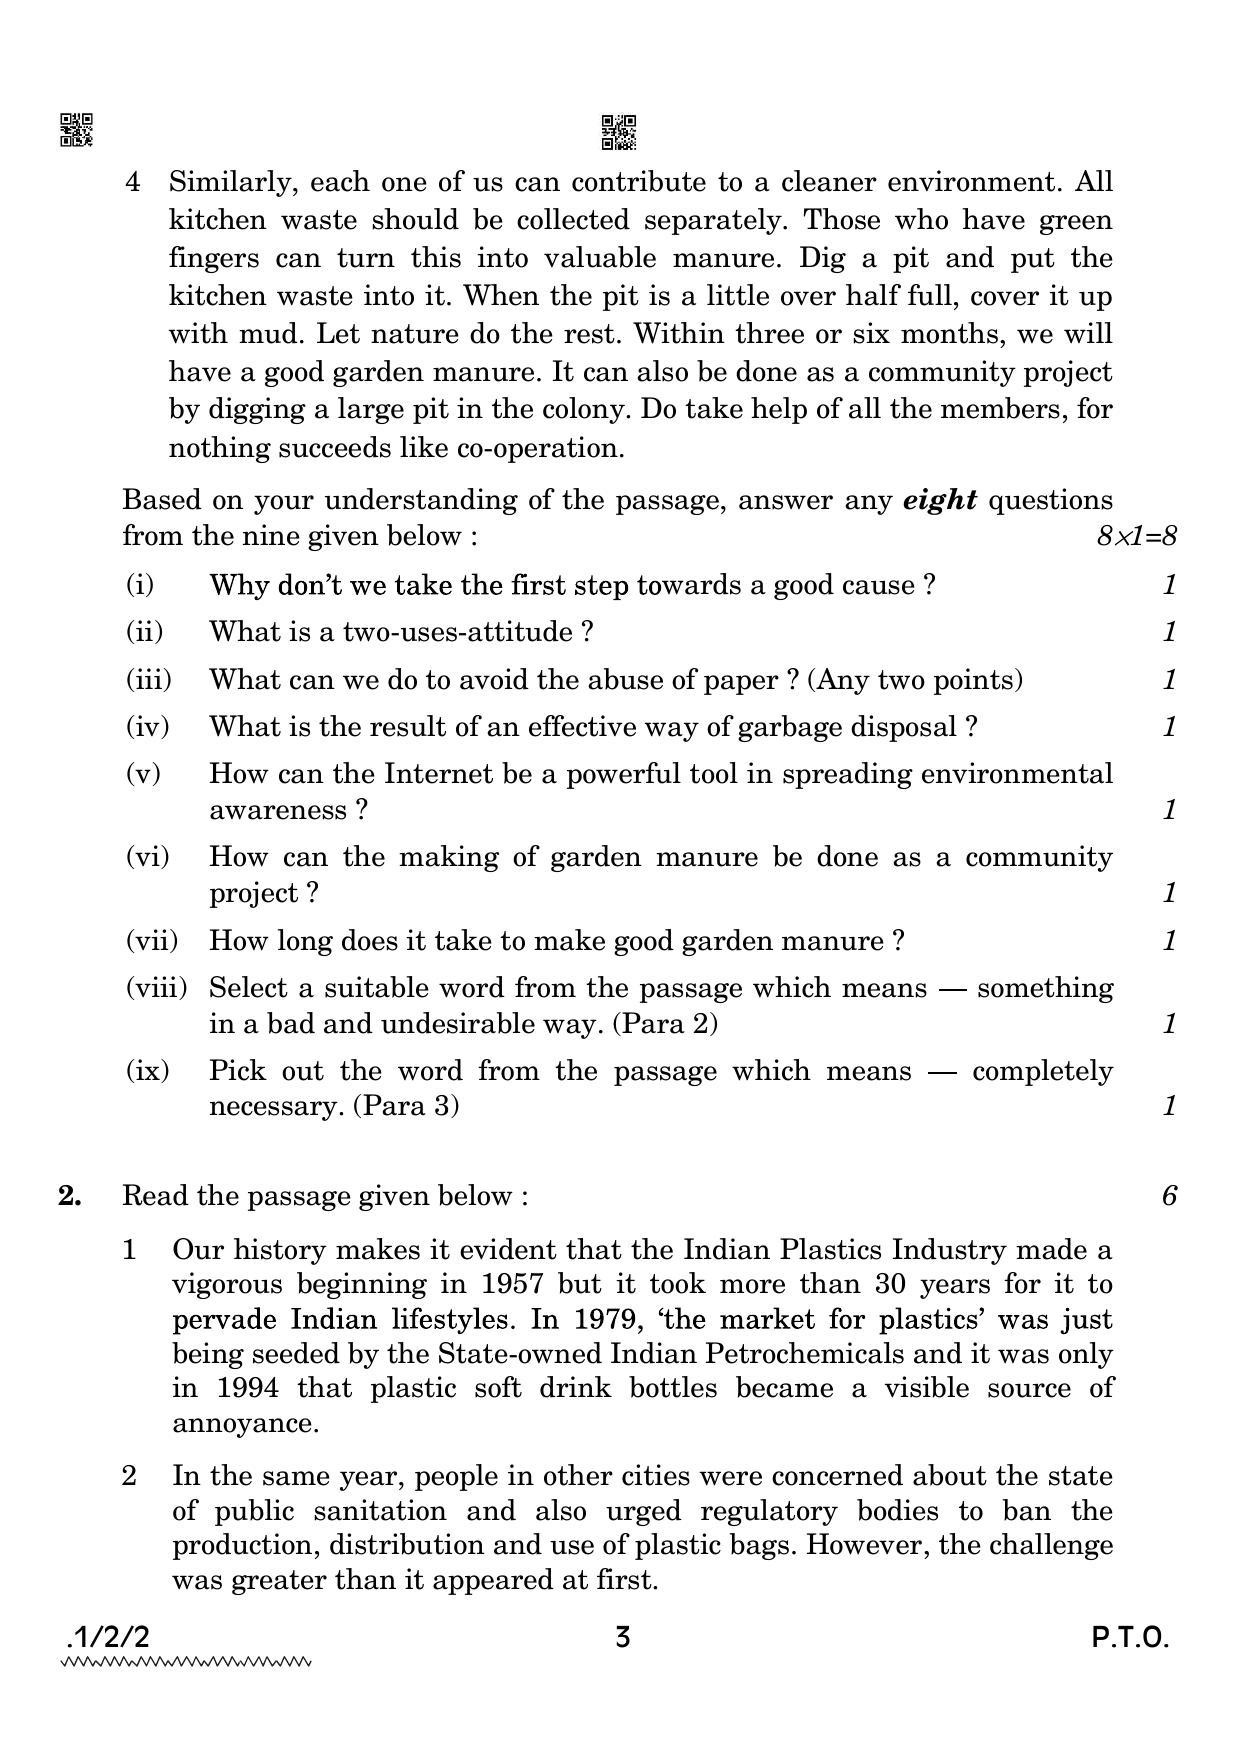 CBSE Class 12 1-2-2 English Core 2022 Question Paper - Page 3